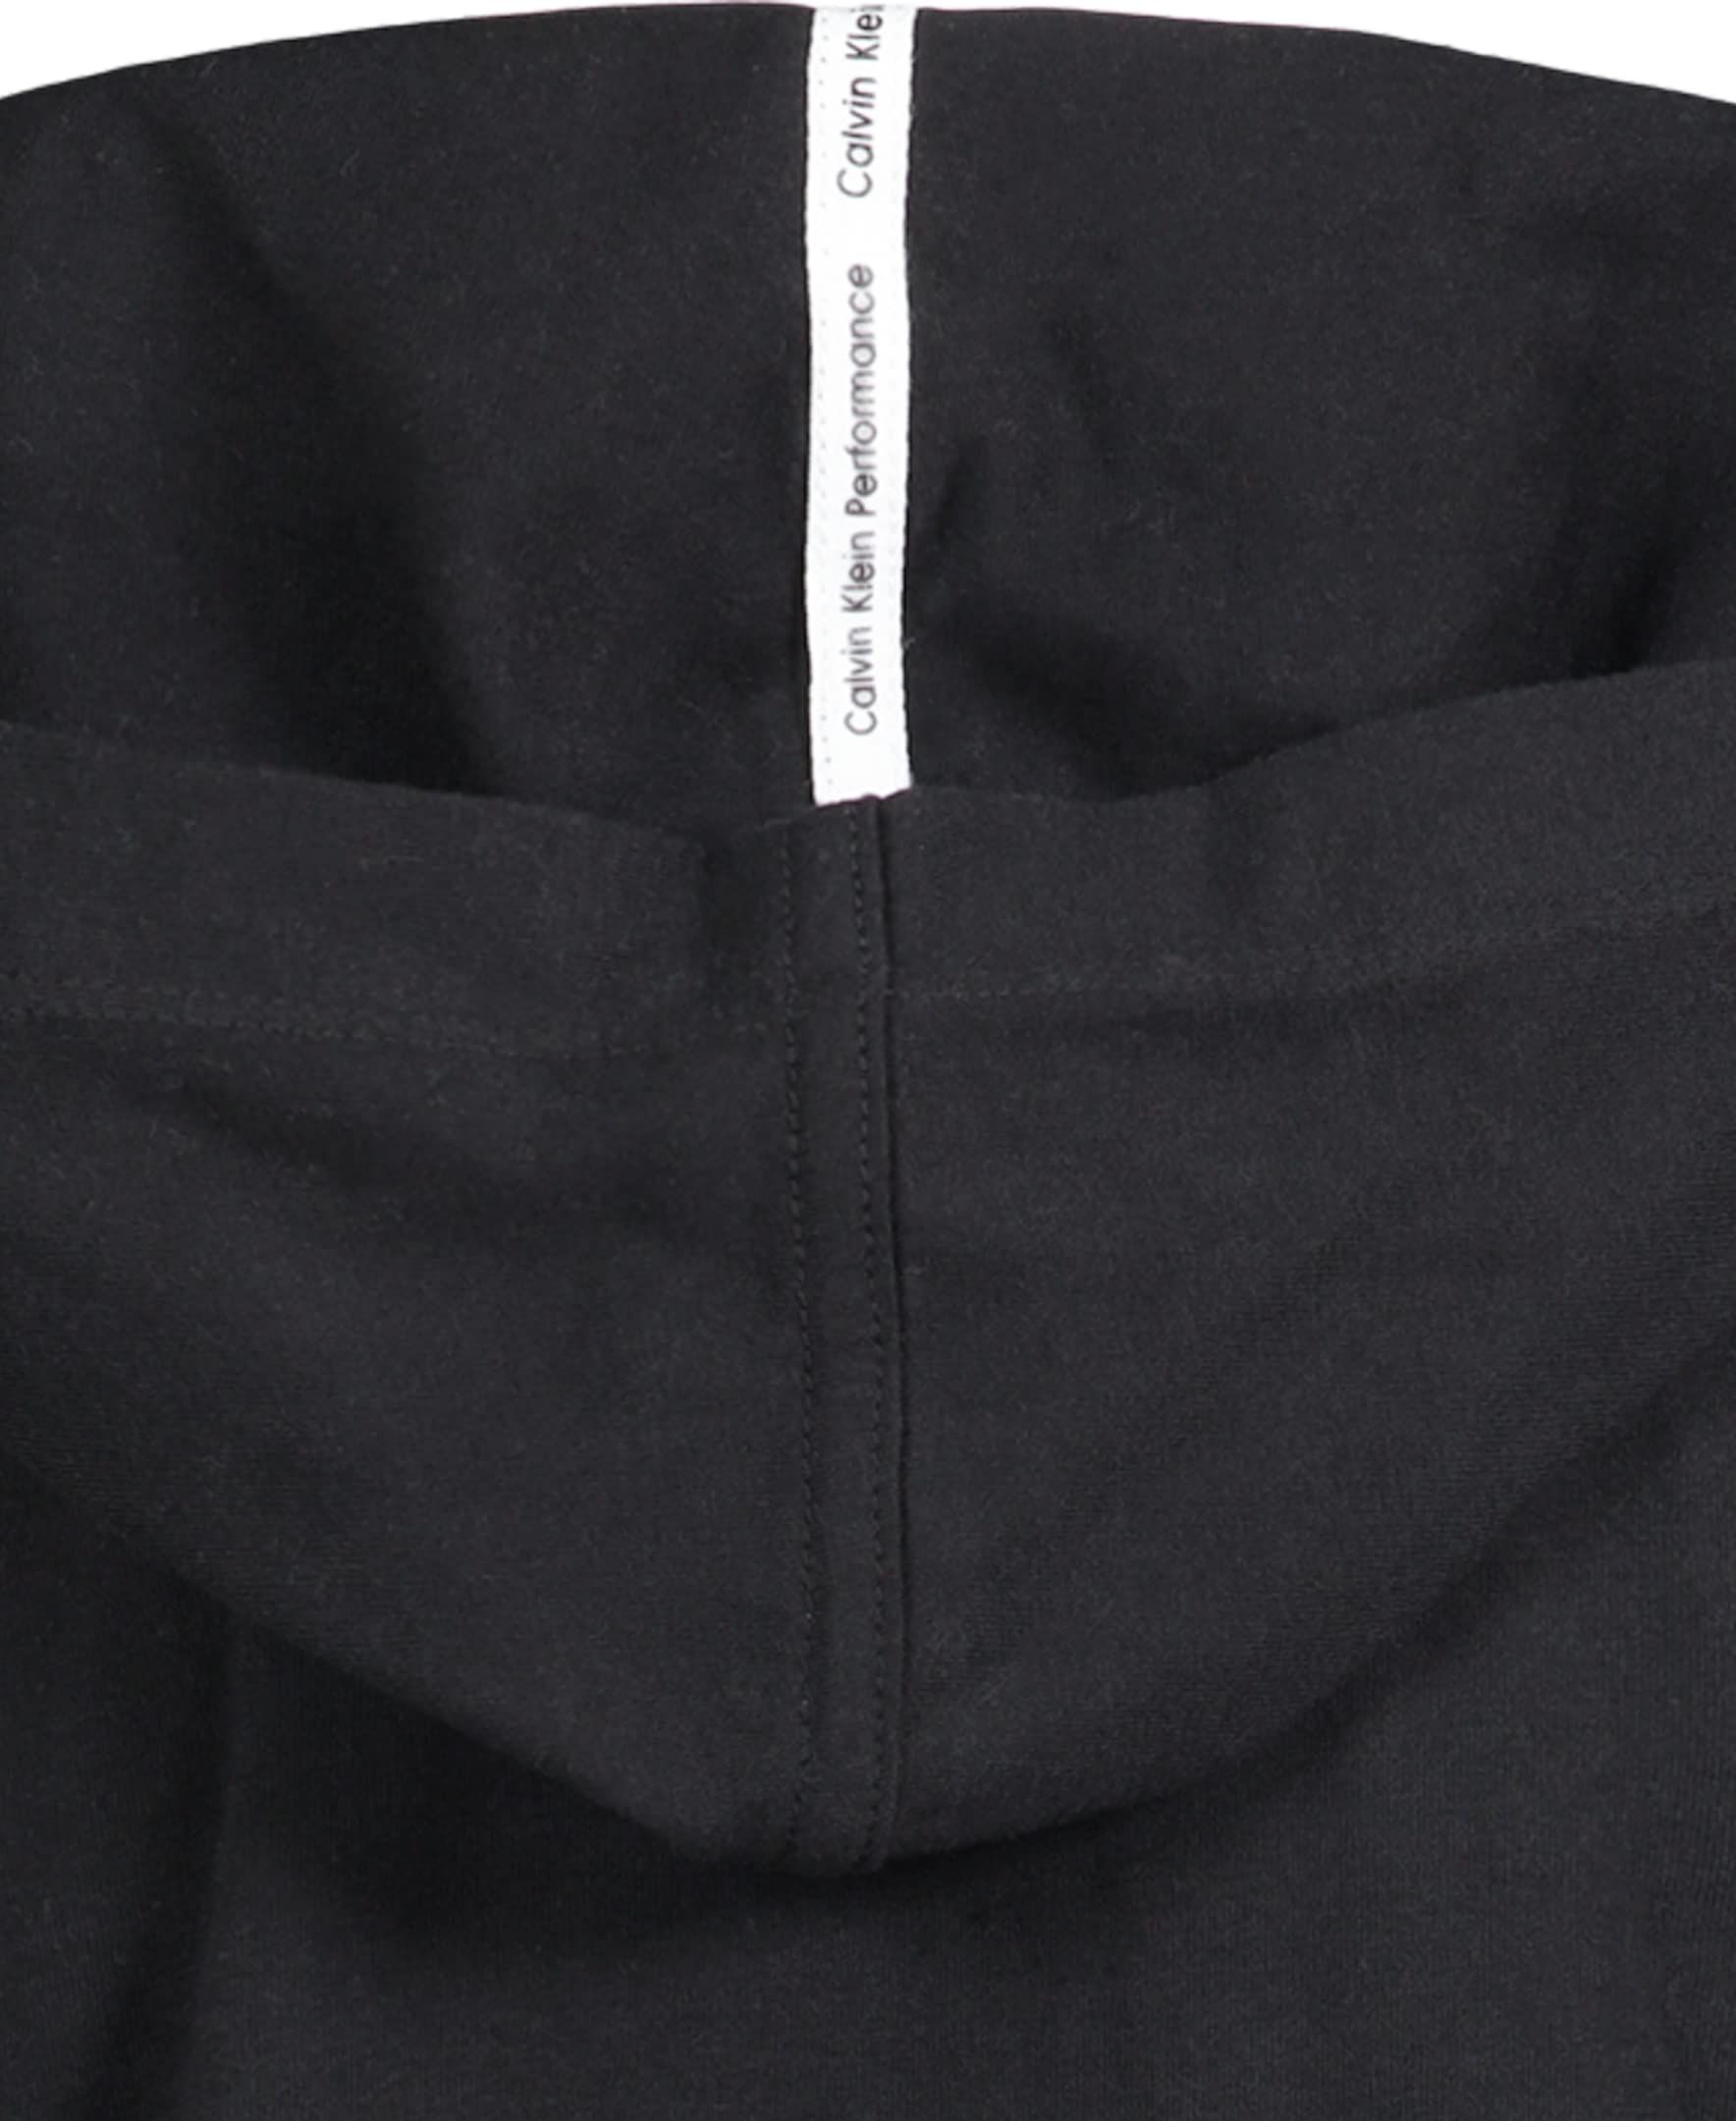 Calvin Klein Girls' One Size Performance Logo Sweatshirt Dress, Fleece Hoodie with Long Or Short Sleeves